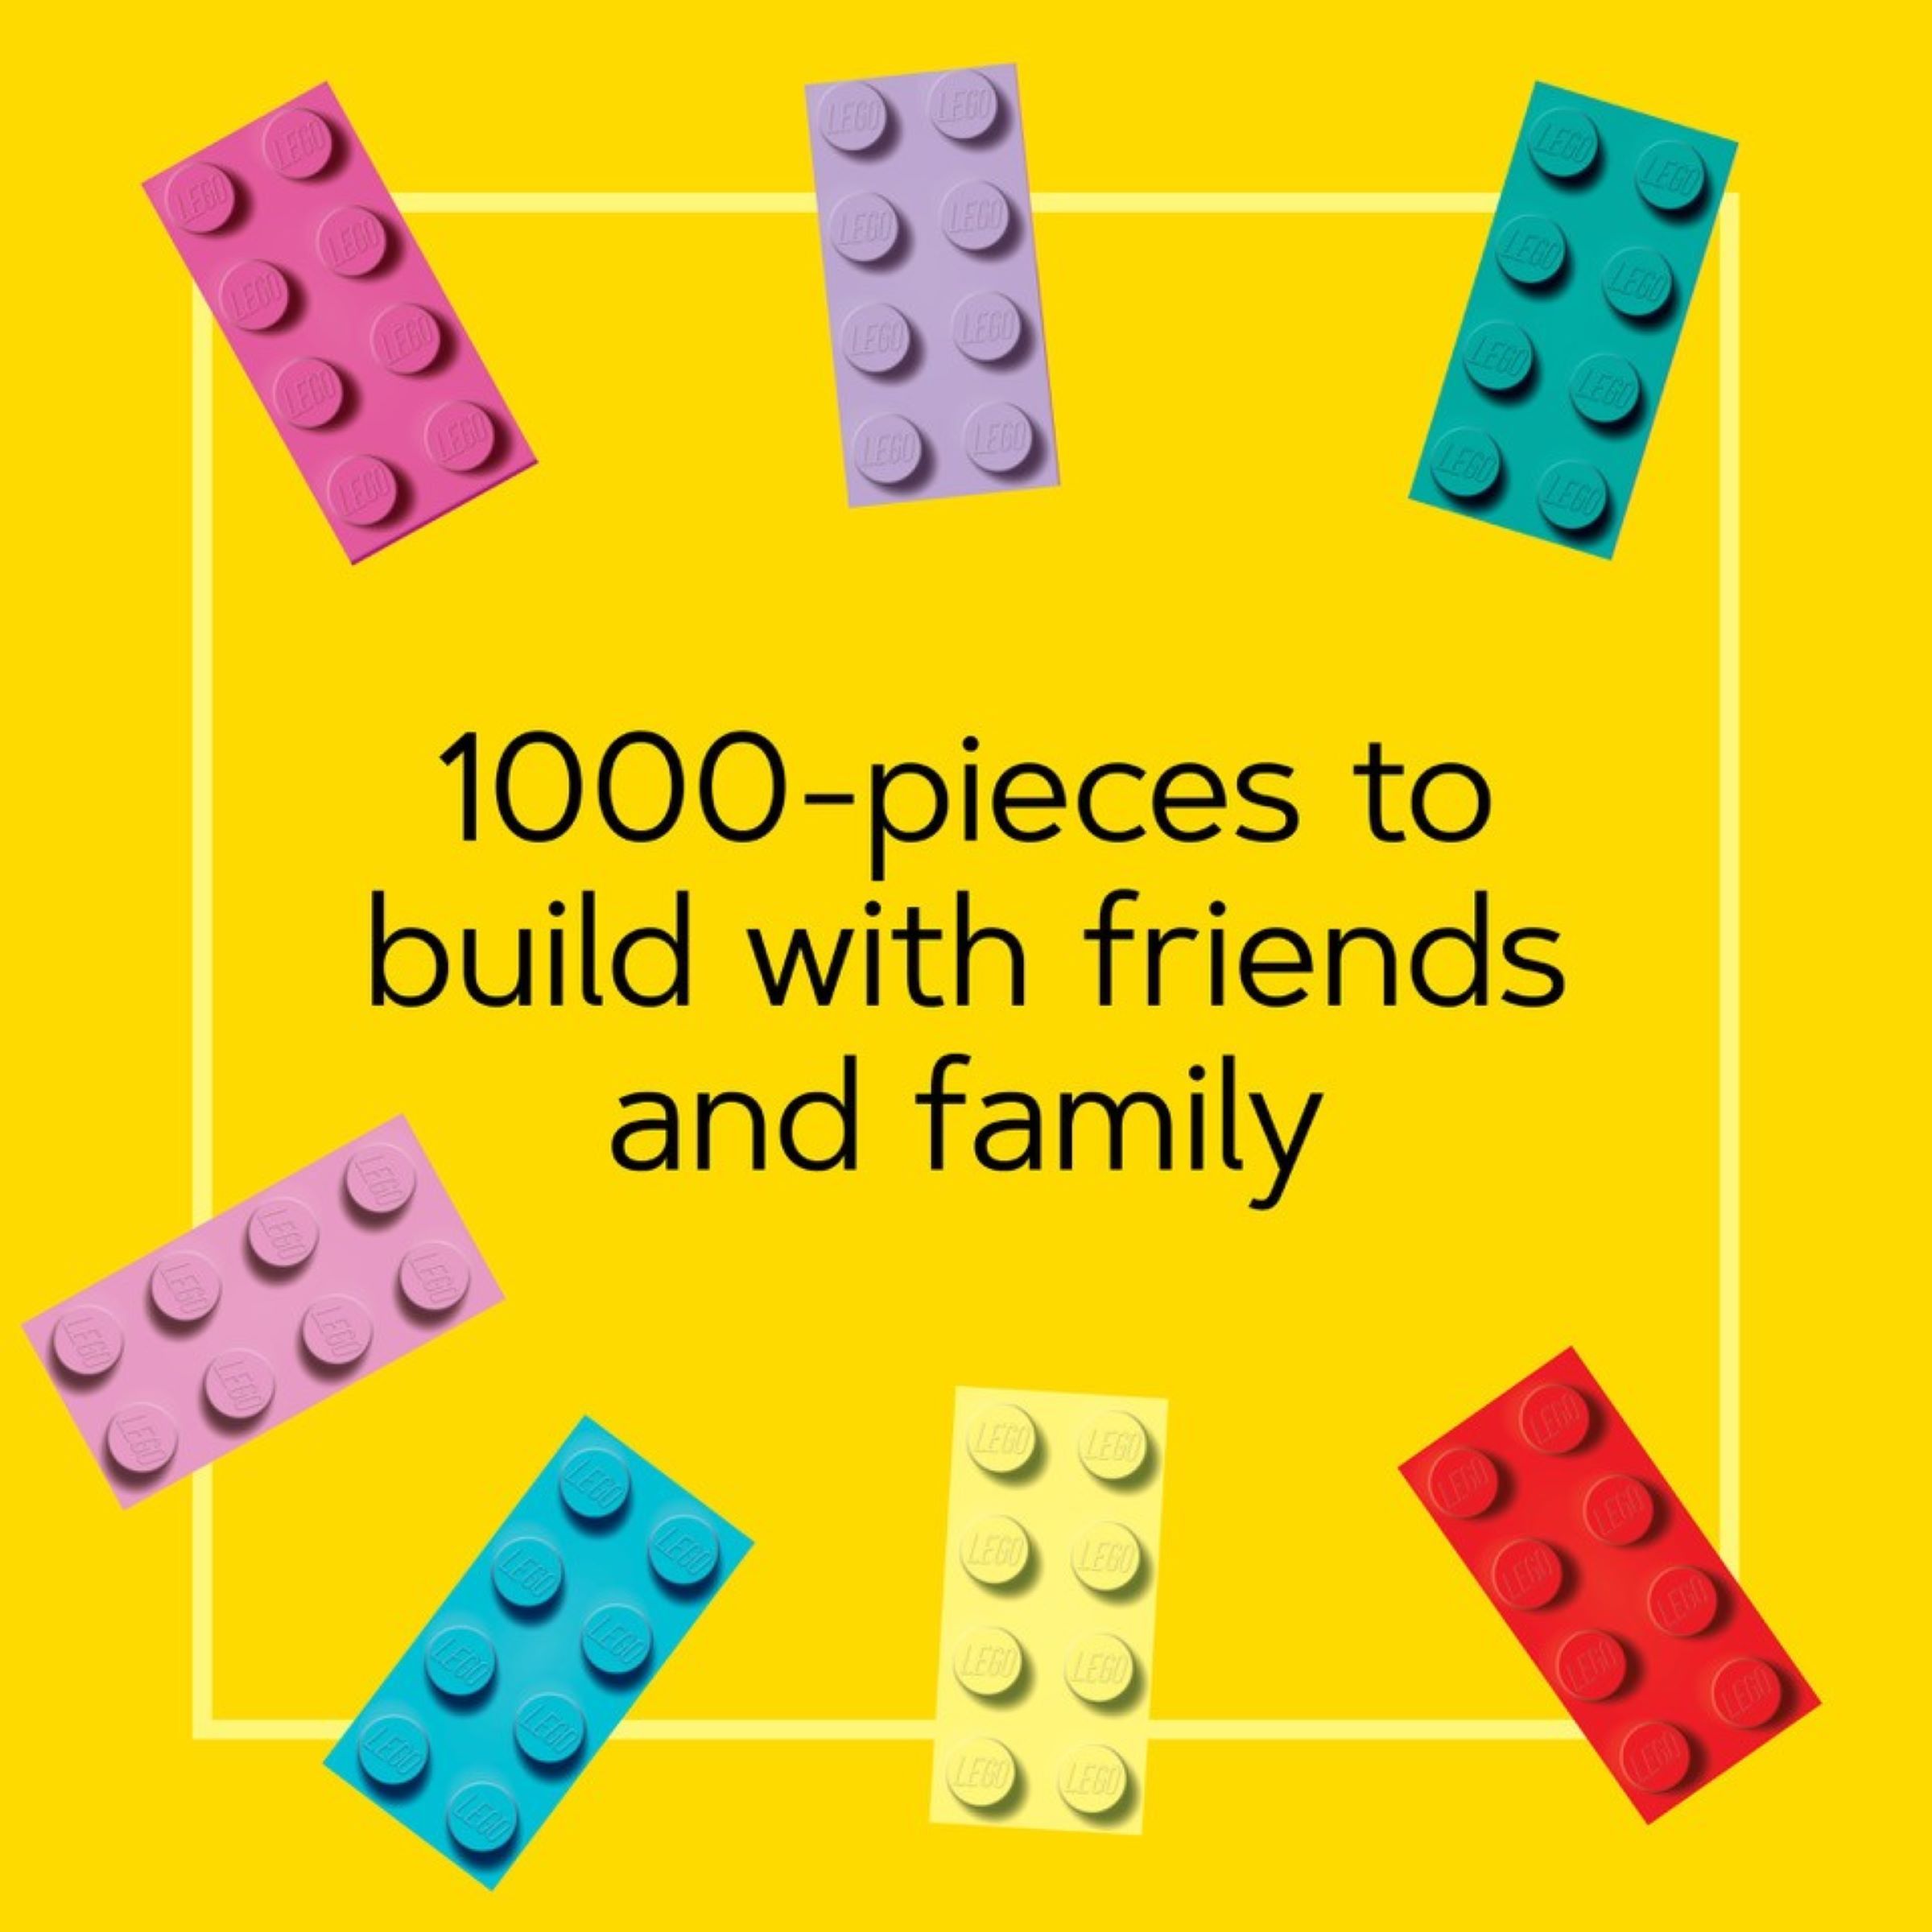 LEGO Buch 5007643 Minifigure Rainbow 1,000-Piece Puzzle LEGO_5007643_alt3.jpg